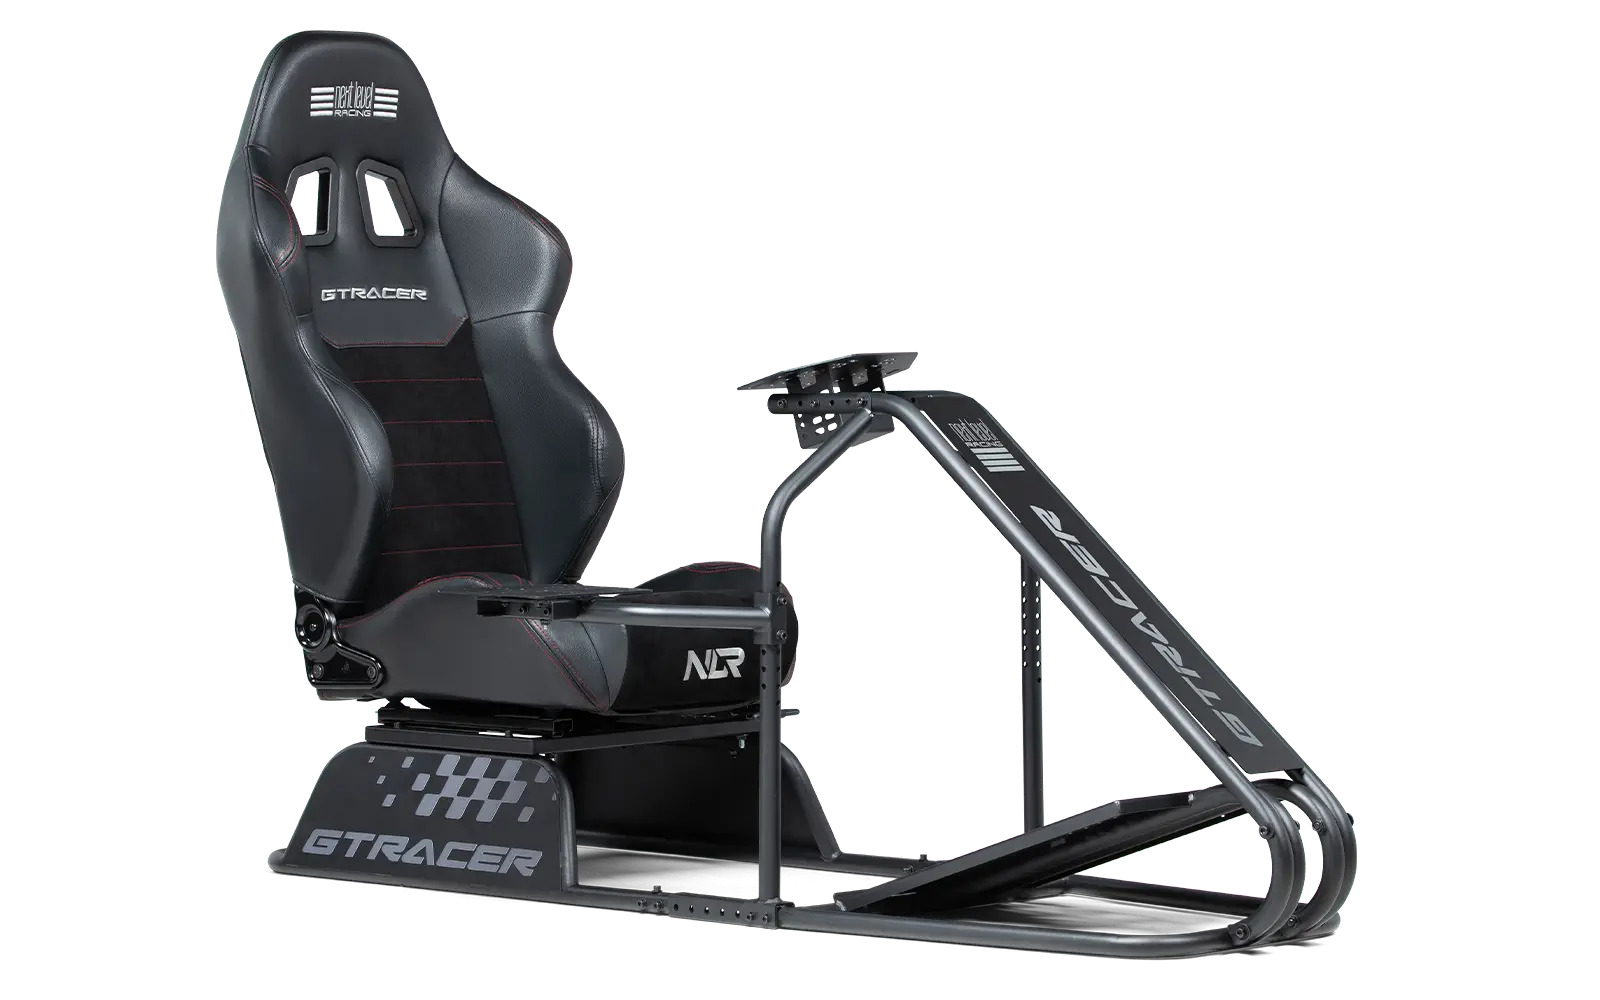 Next Level Racing - Cockpit Next Level Racing GTRacer